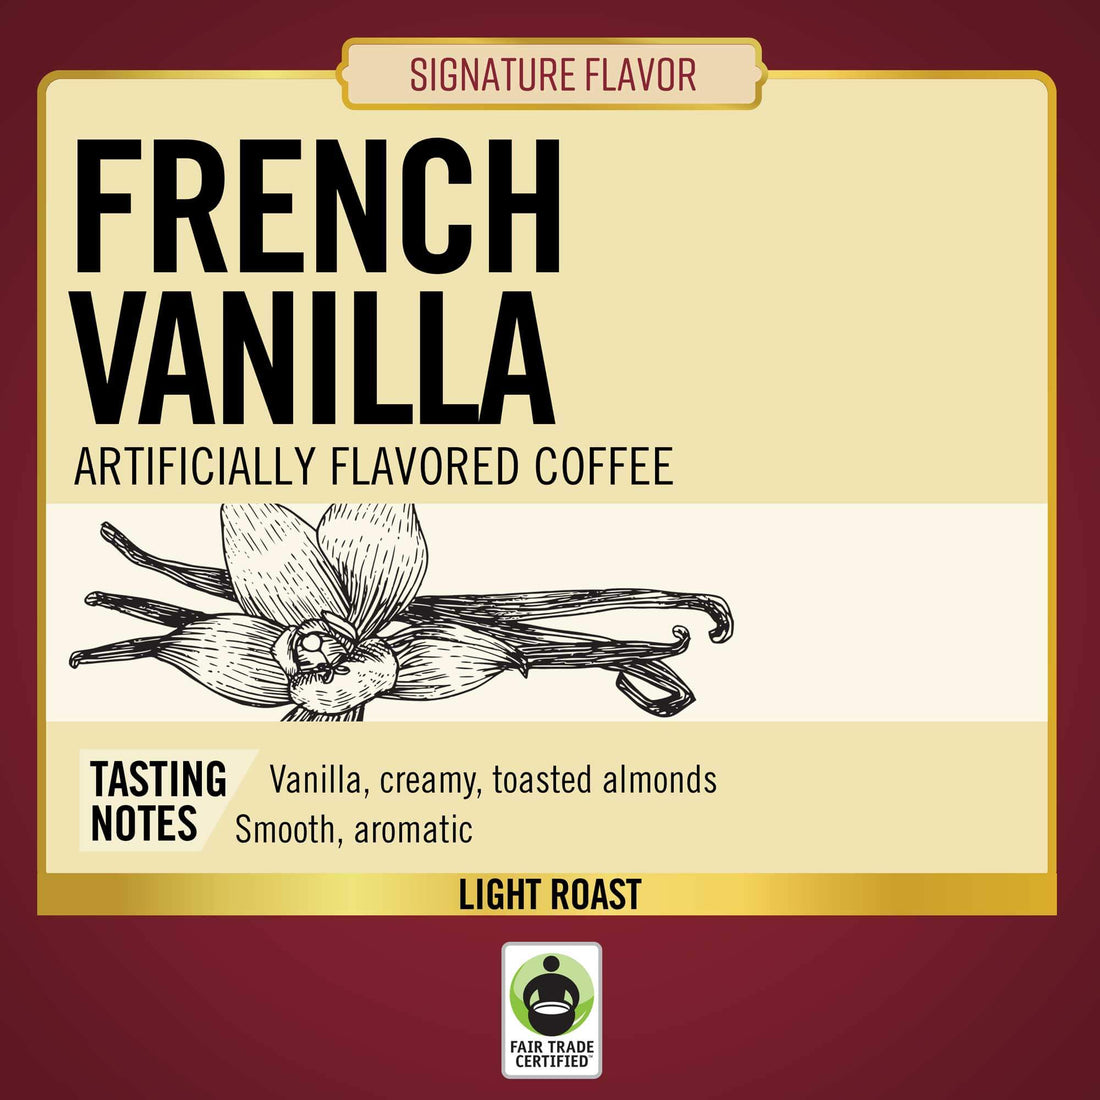 French Vanilla FT